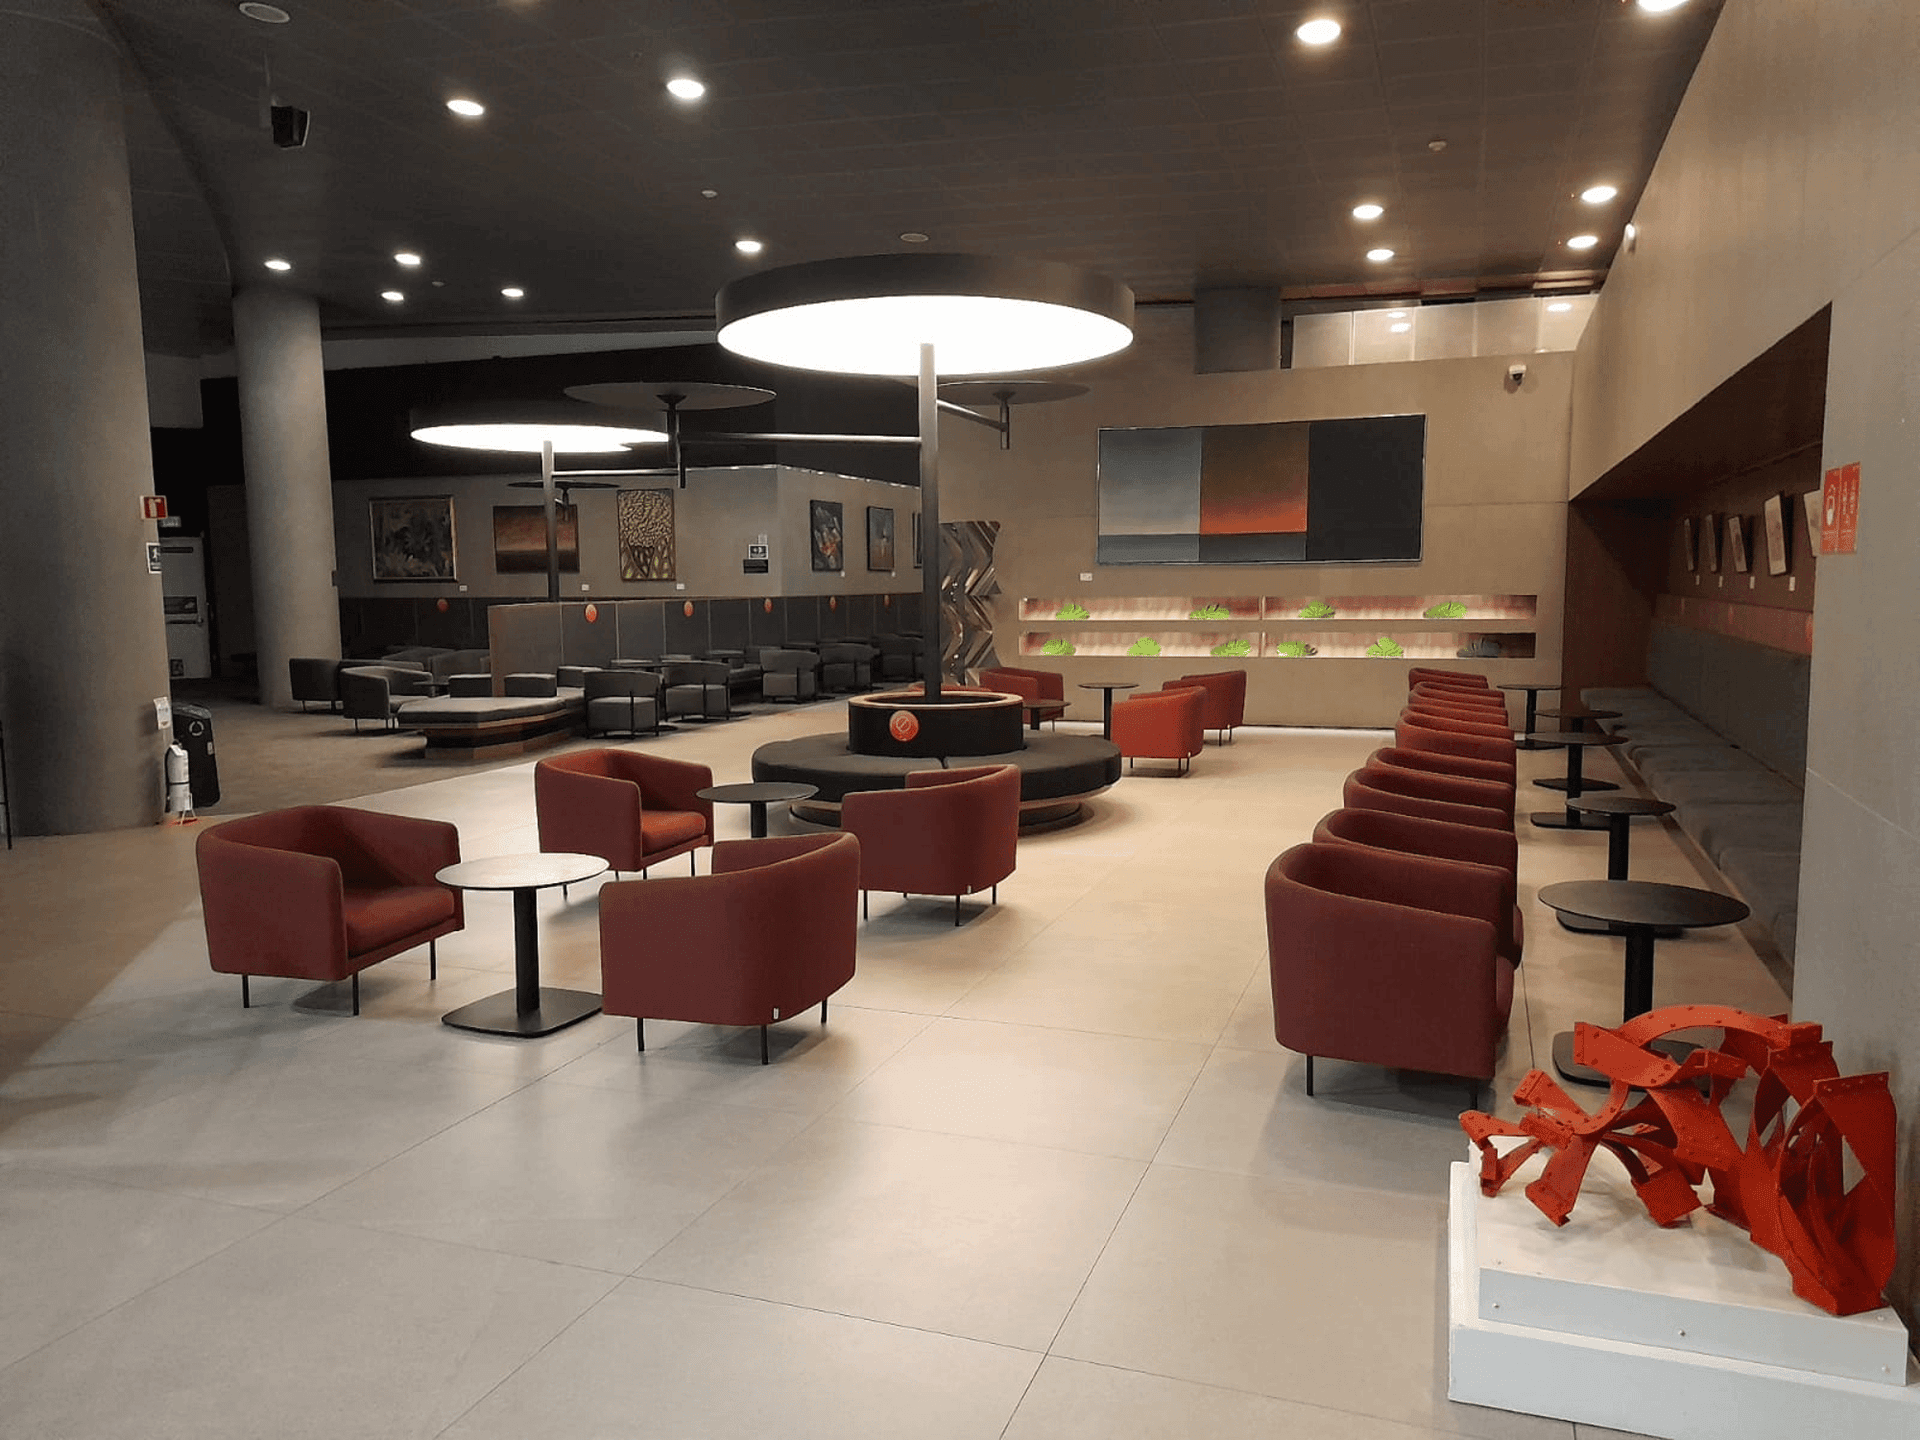 Avianca Lounge Bogota (Domestic) image 23 of 25